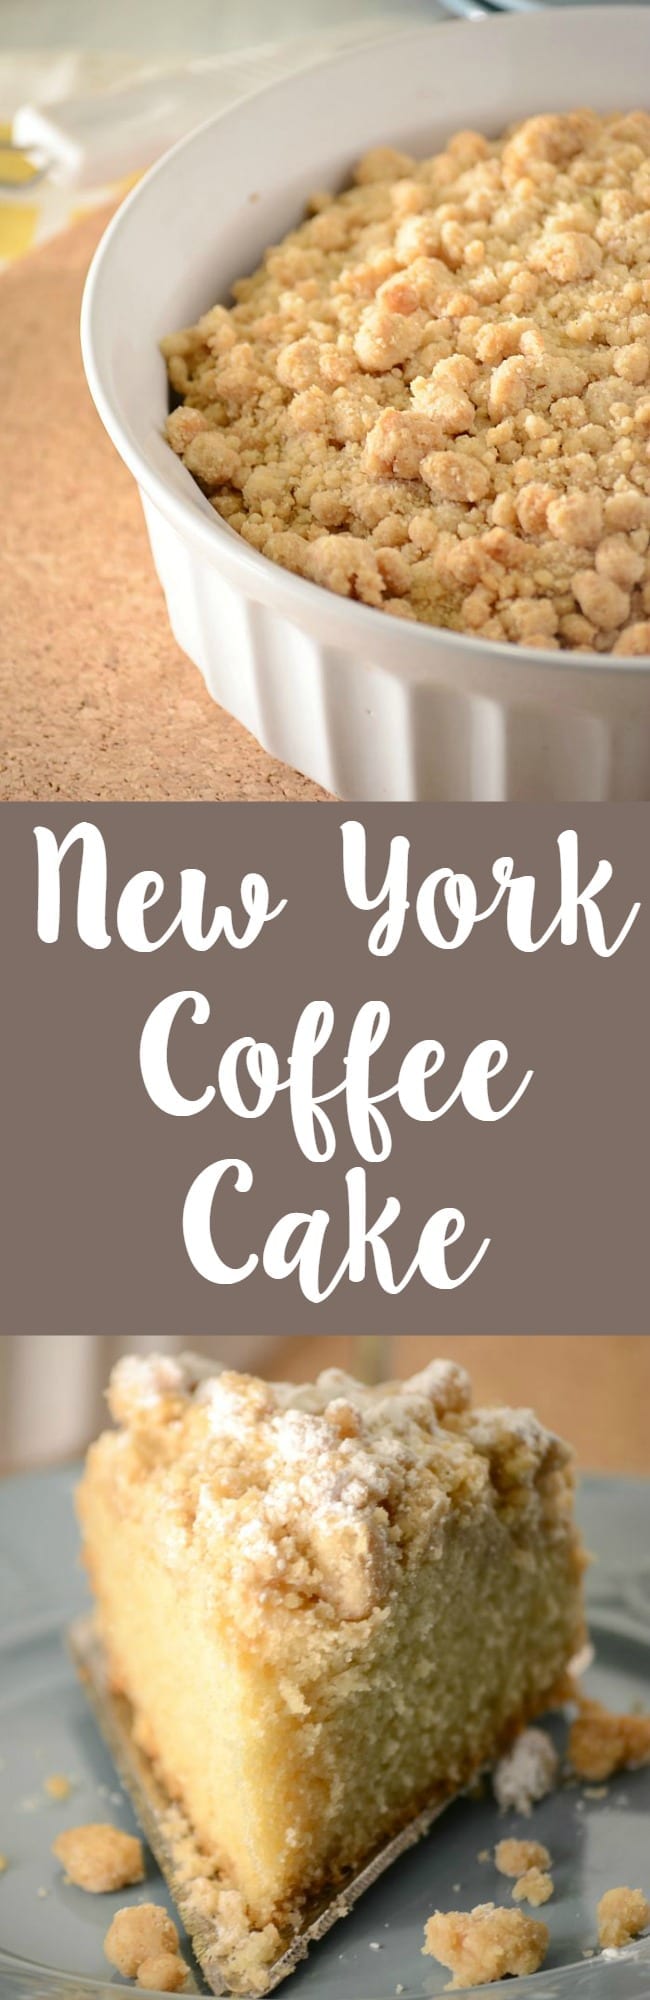 New York style coffee cake recipe